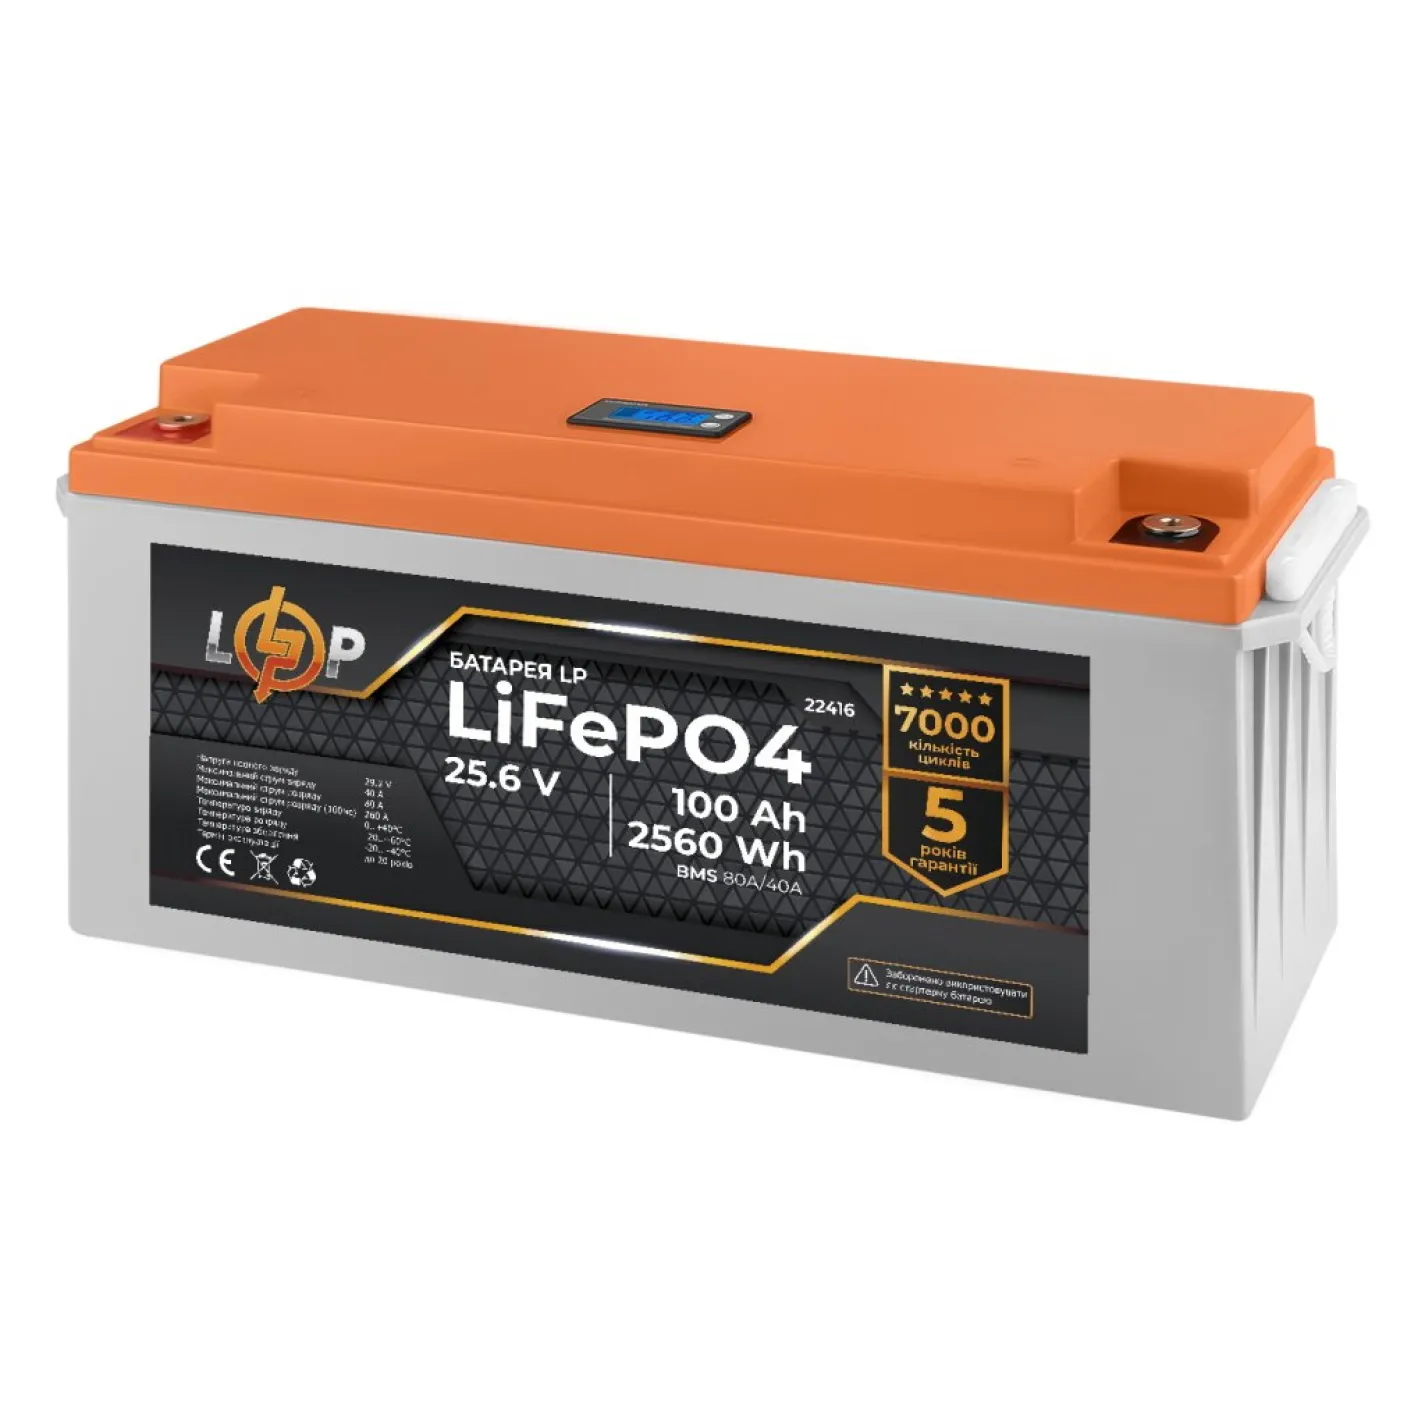 Акумулятор для ДБЖ LogicPower LP LiFePO4 24V - 100 Ah (2560Wh) (BMS 80/40А) LCD - Фото 1